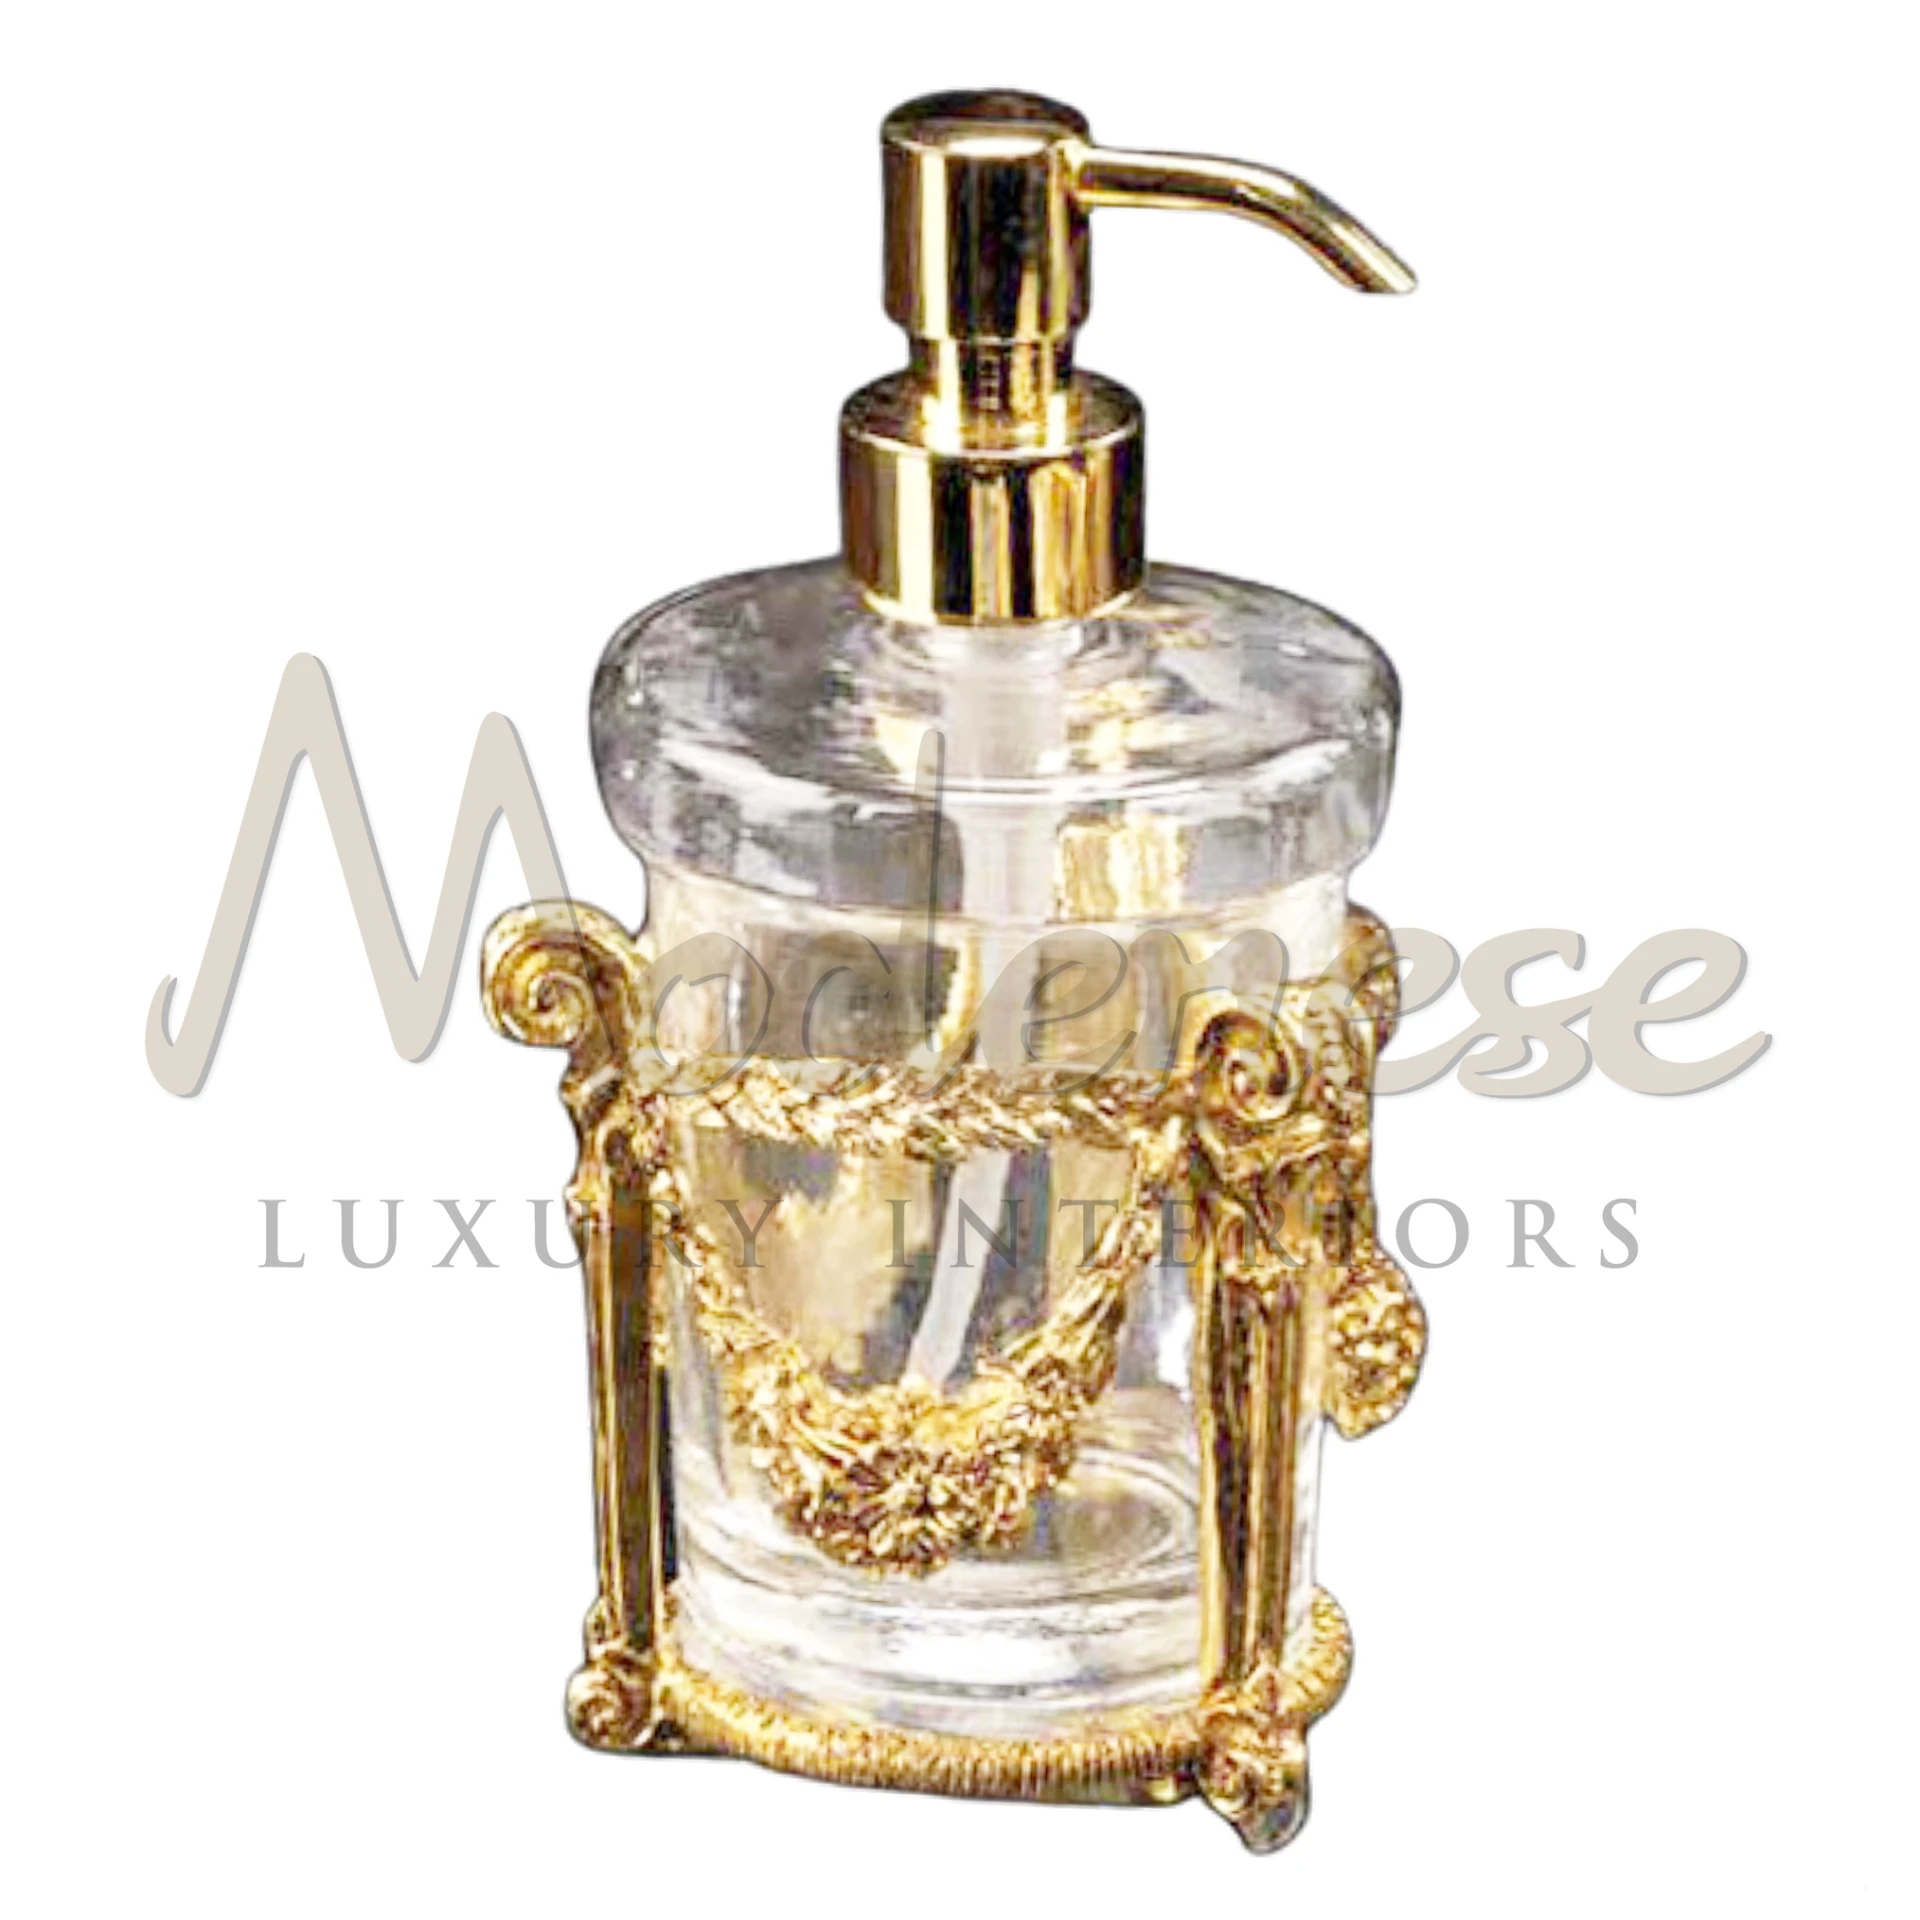 Elegant gold soap dispenser on marble countertop, perfect for enhancing bathroom interior design.